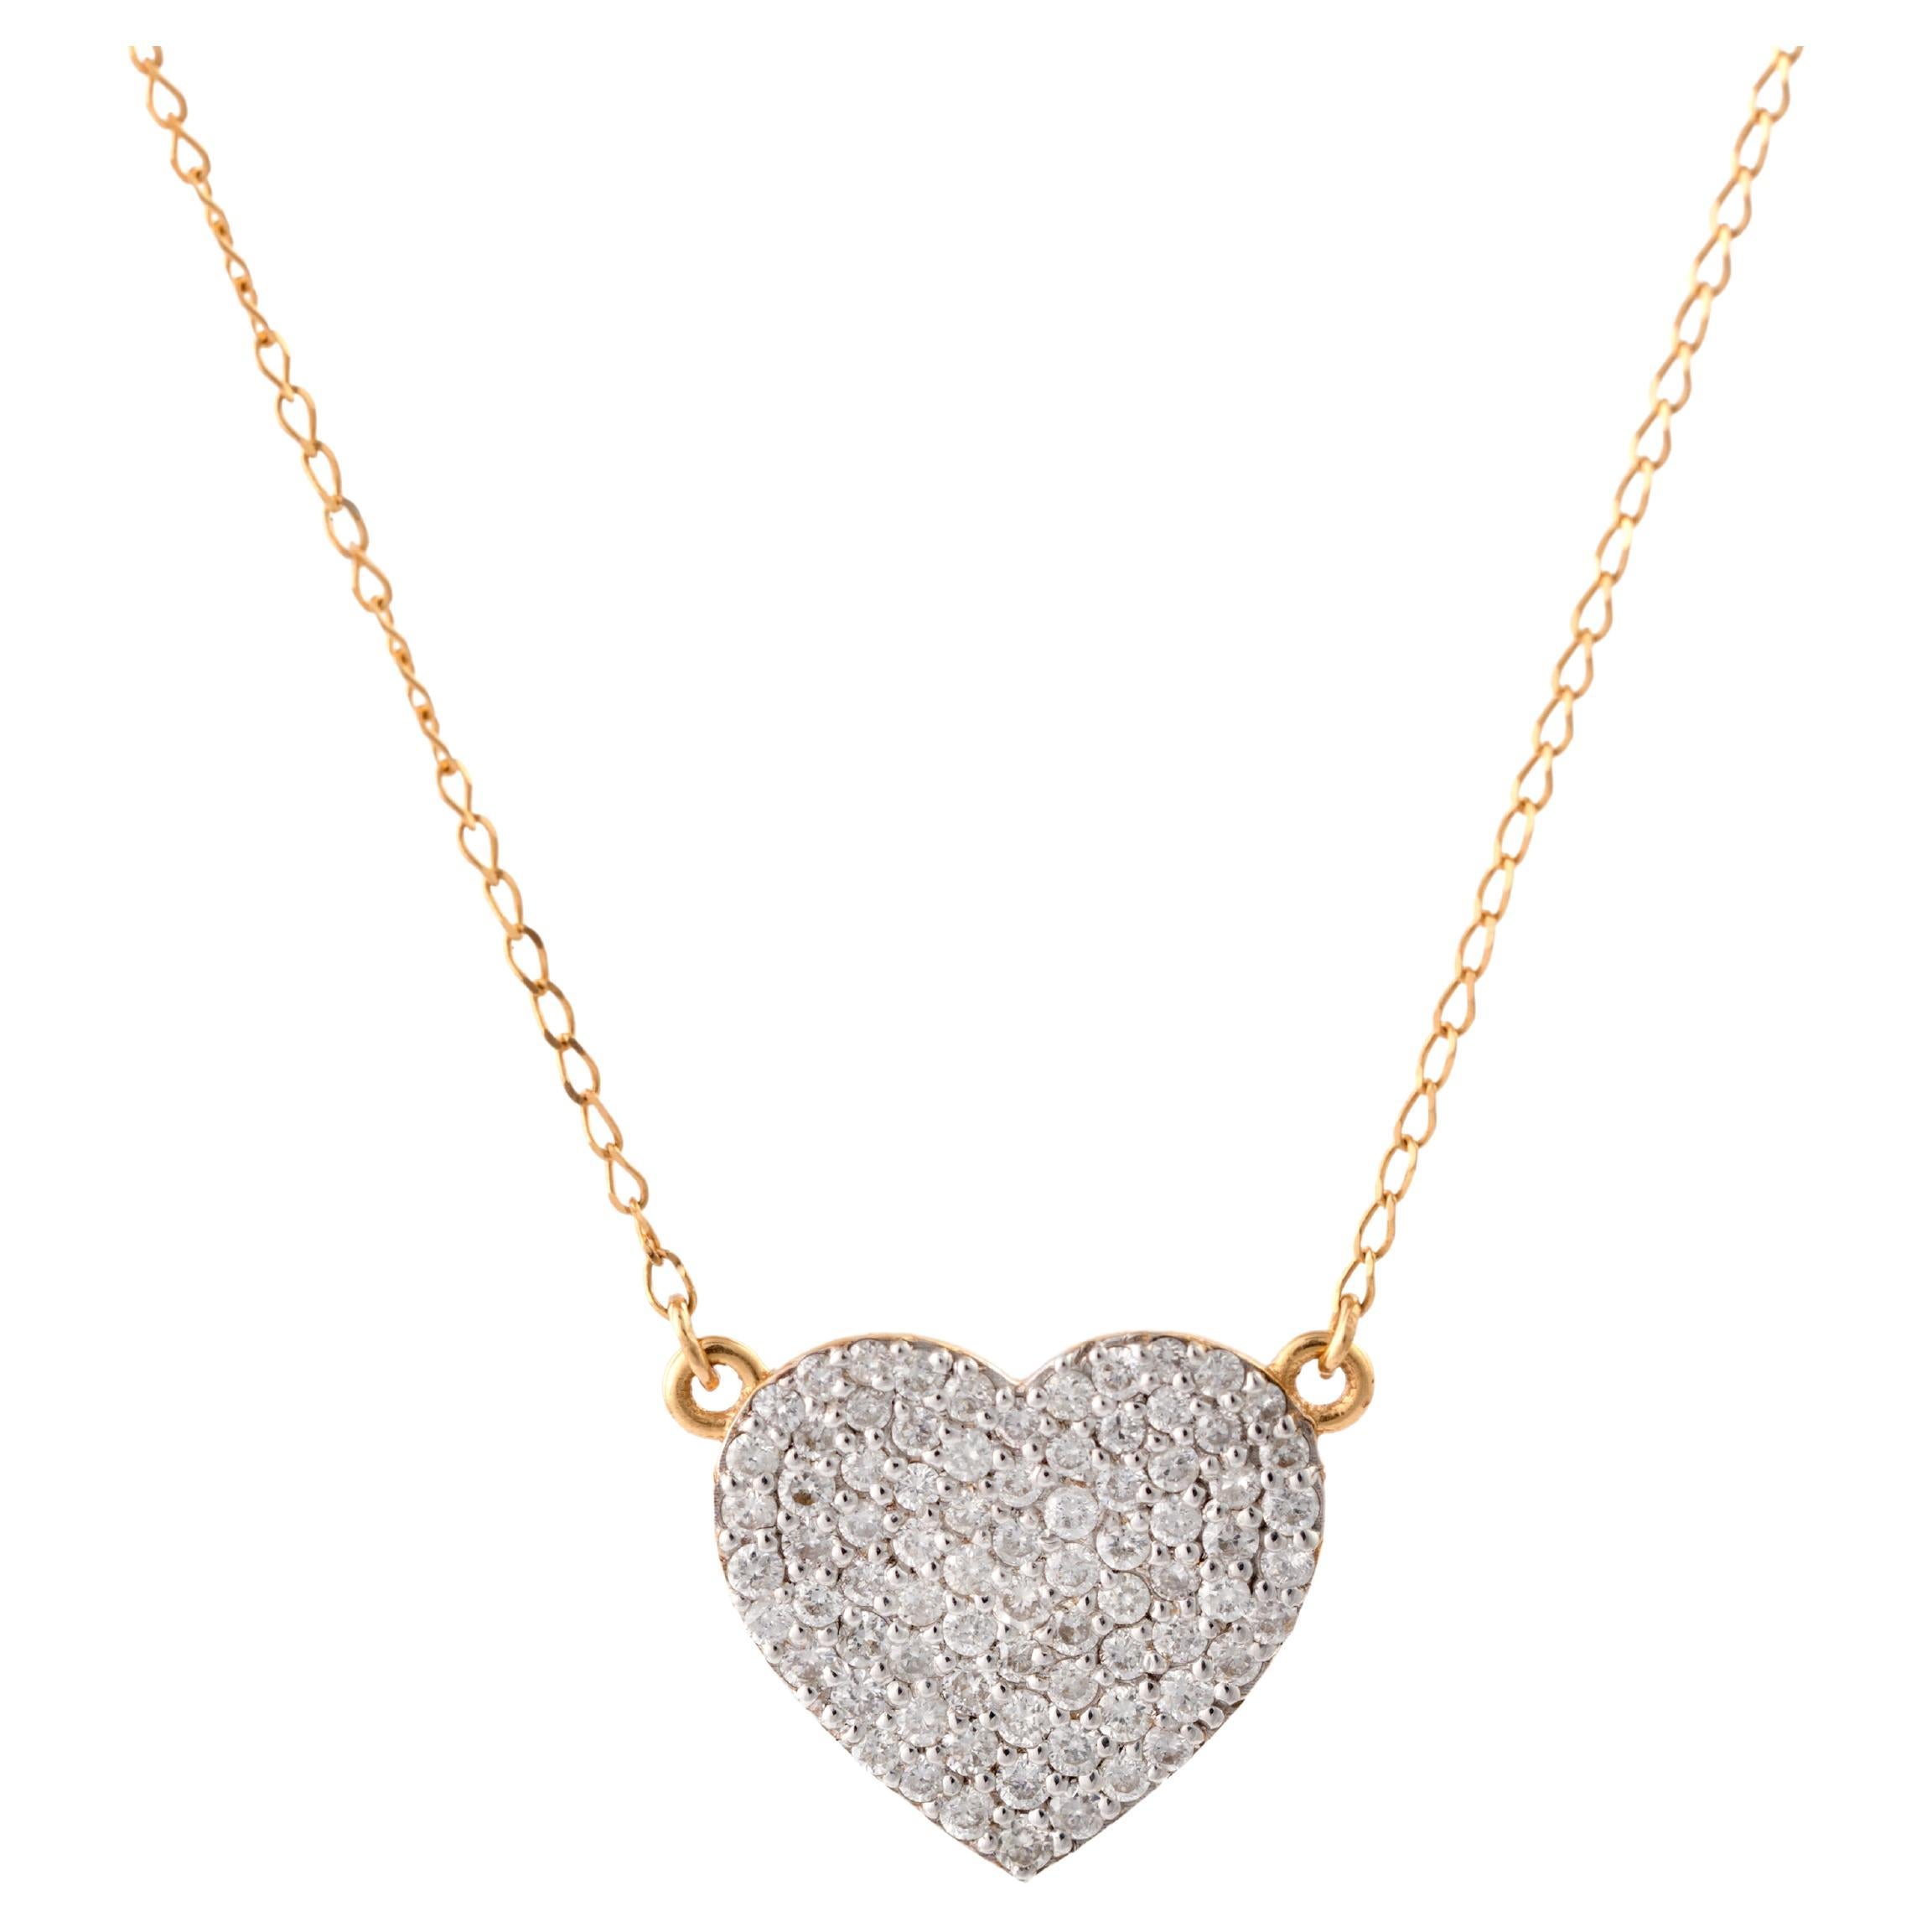 Natural Diamond 0.56 Carats Heart Shape Pendant in 18k Gold